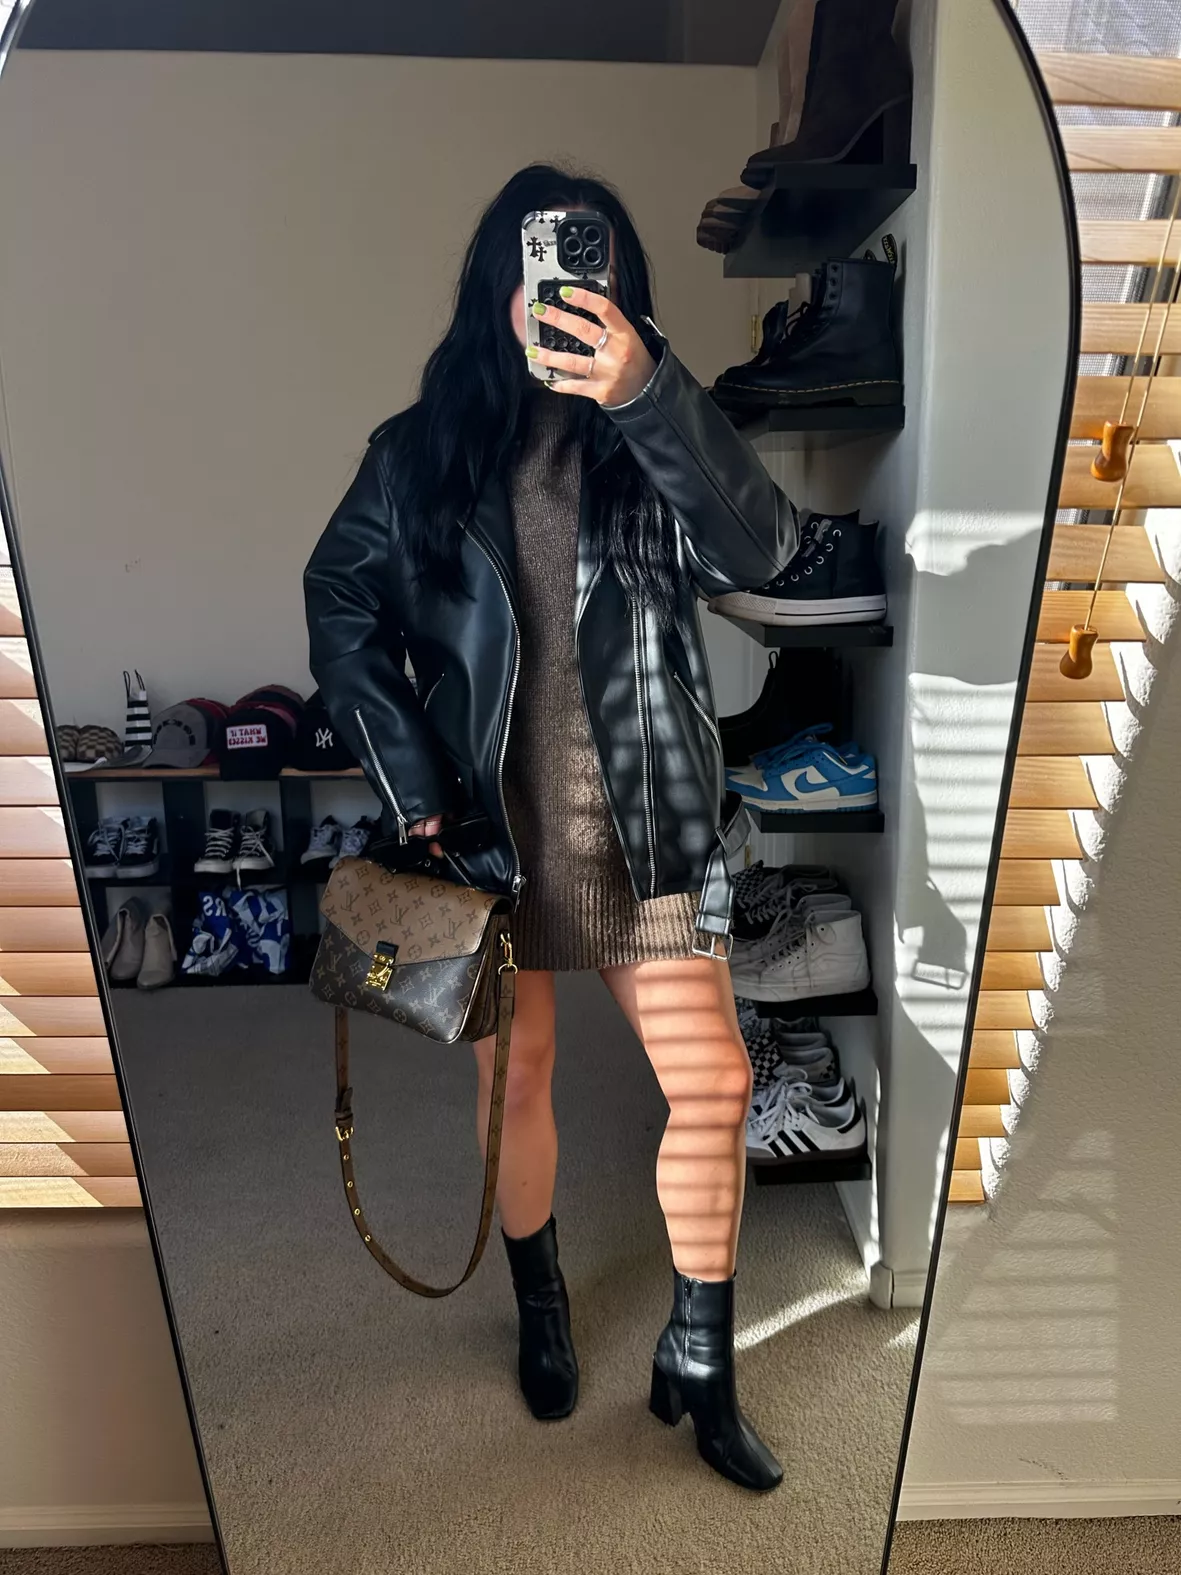 Womens Petite Black Leather Hooded Jacket